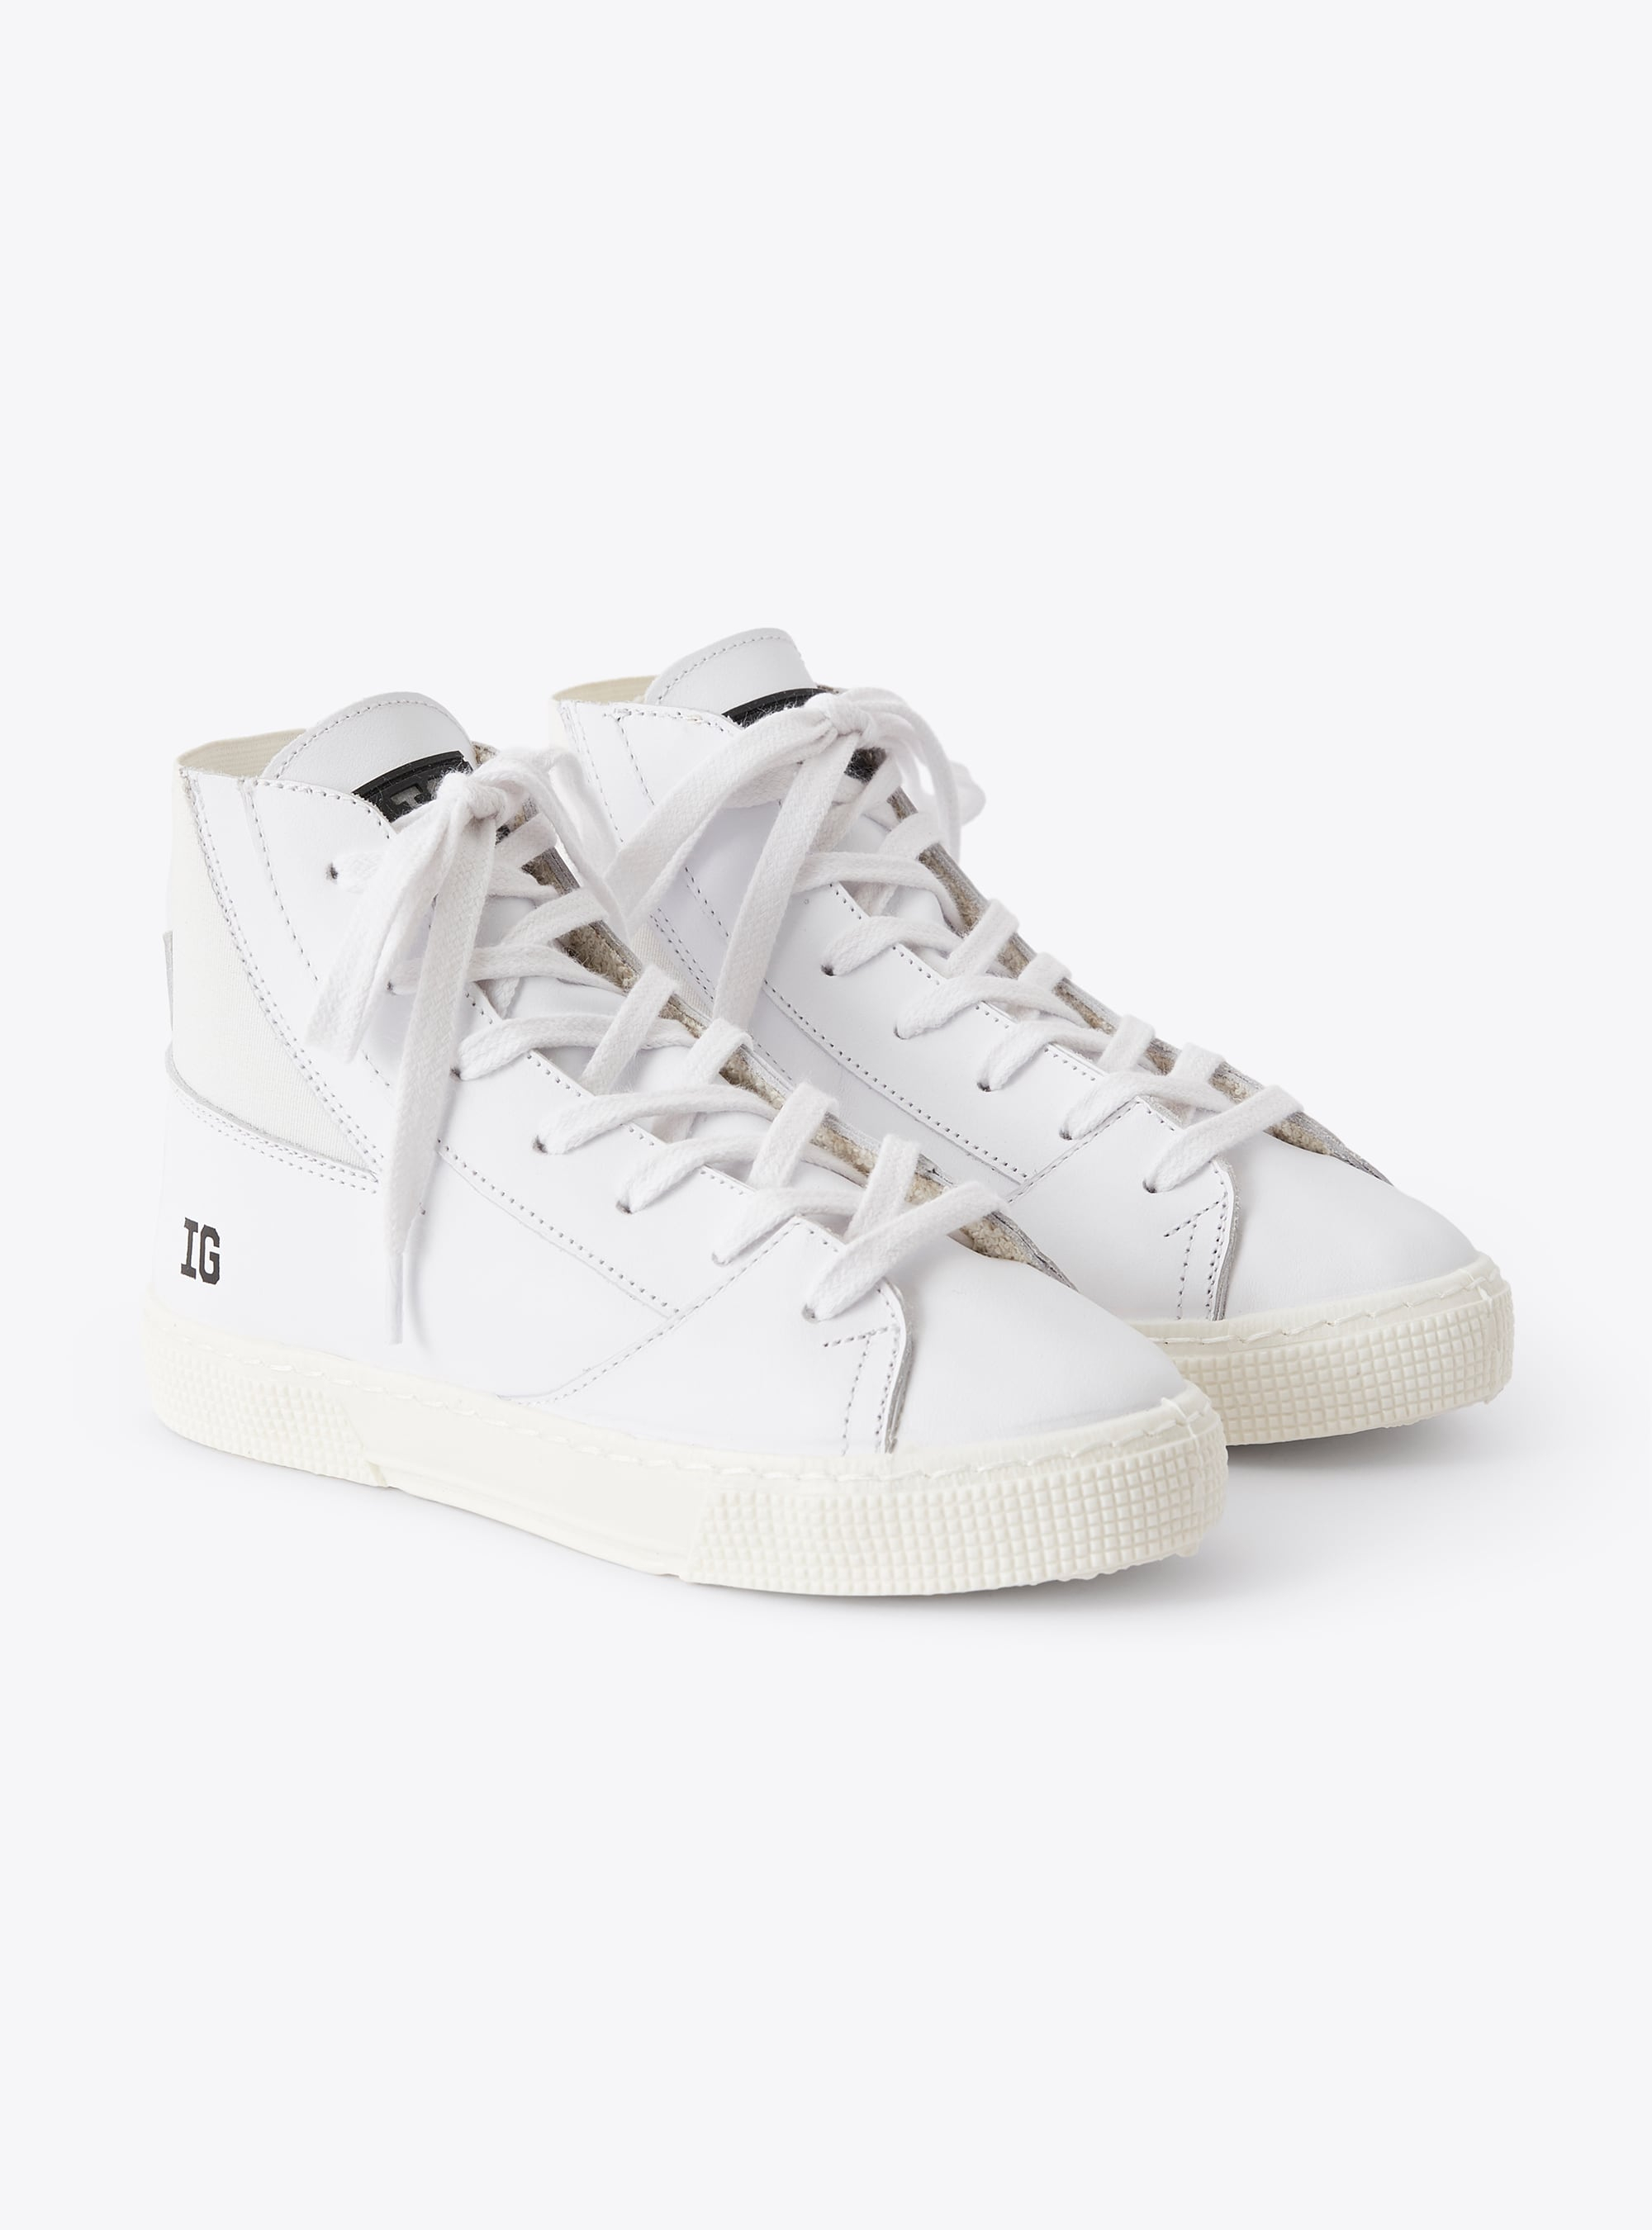 Hochgeschlossene IG-Sneakers aus weißem Leder - Schuhe - Il Gufo